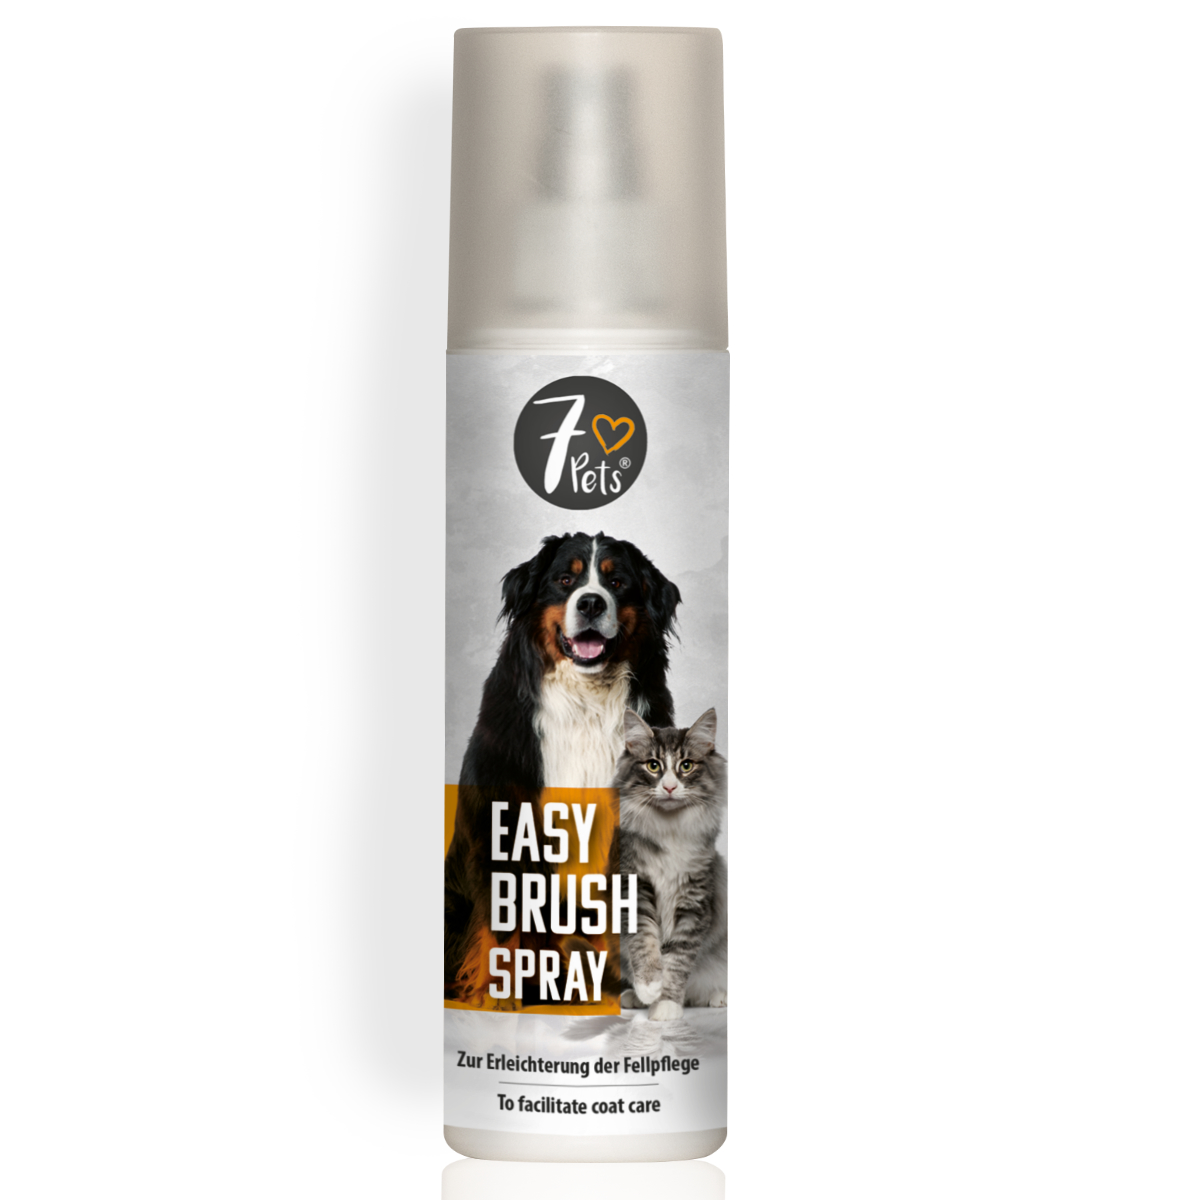 Fellpflegespray easy brush Spray  200ml